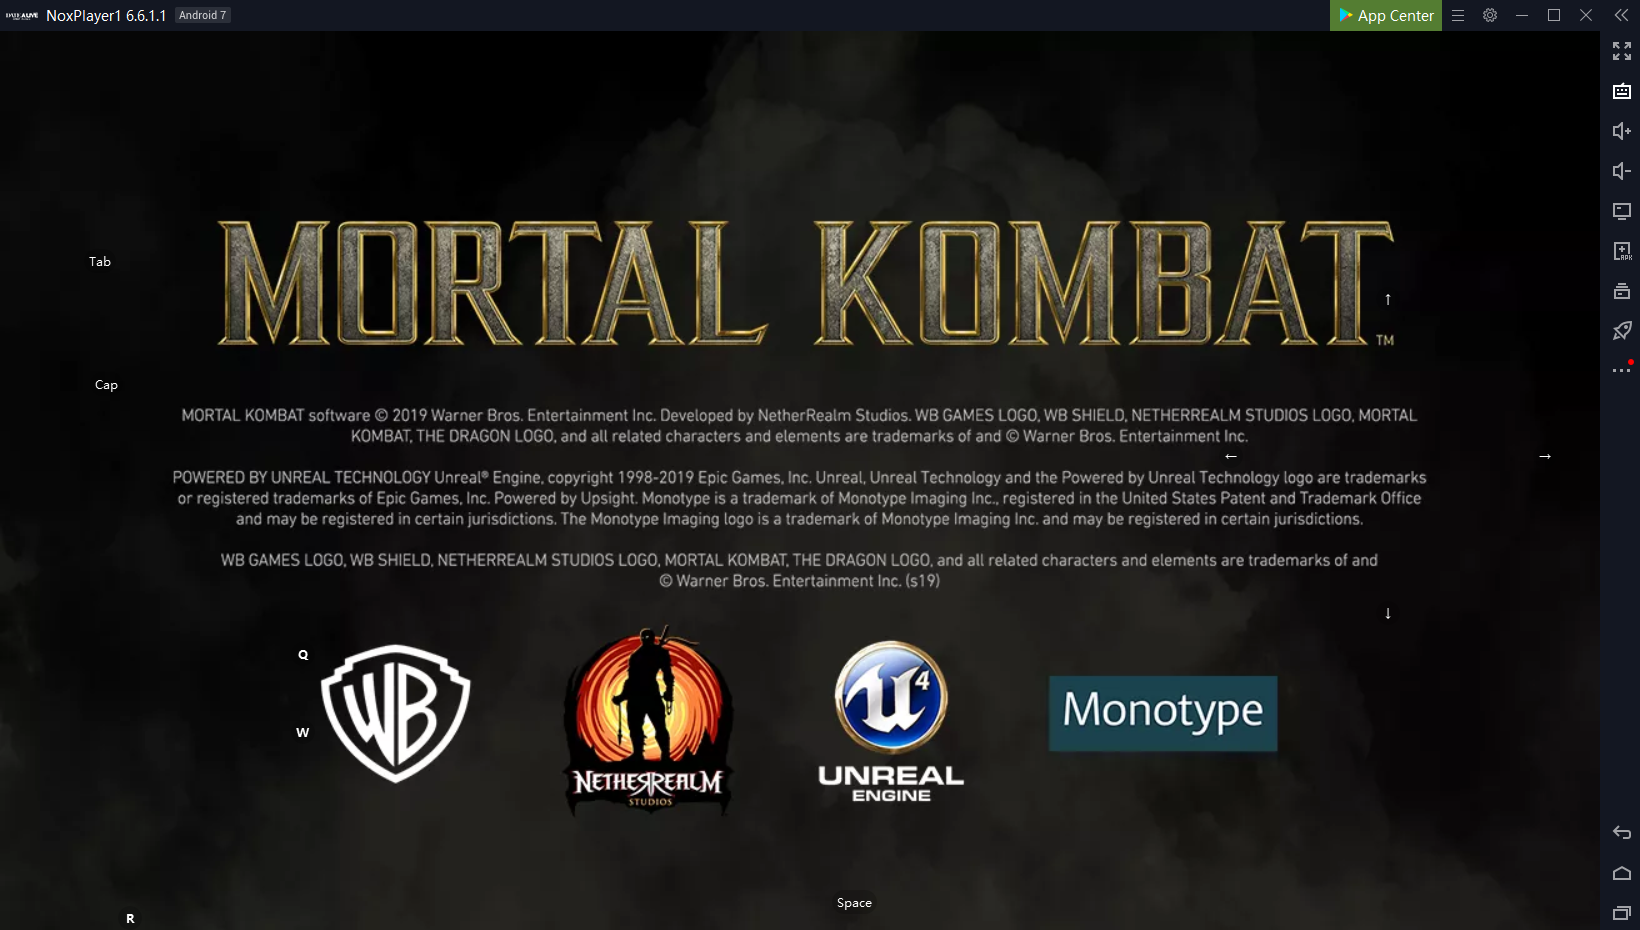 Play Mortal Kombat Games - Emulator Online